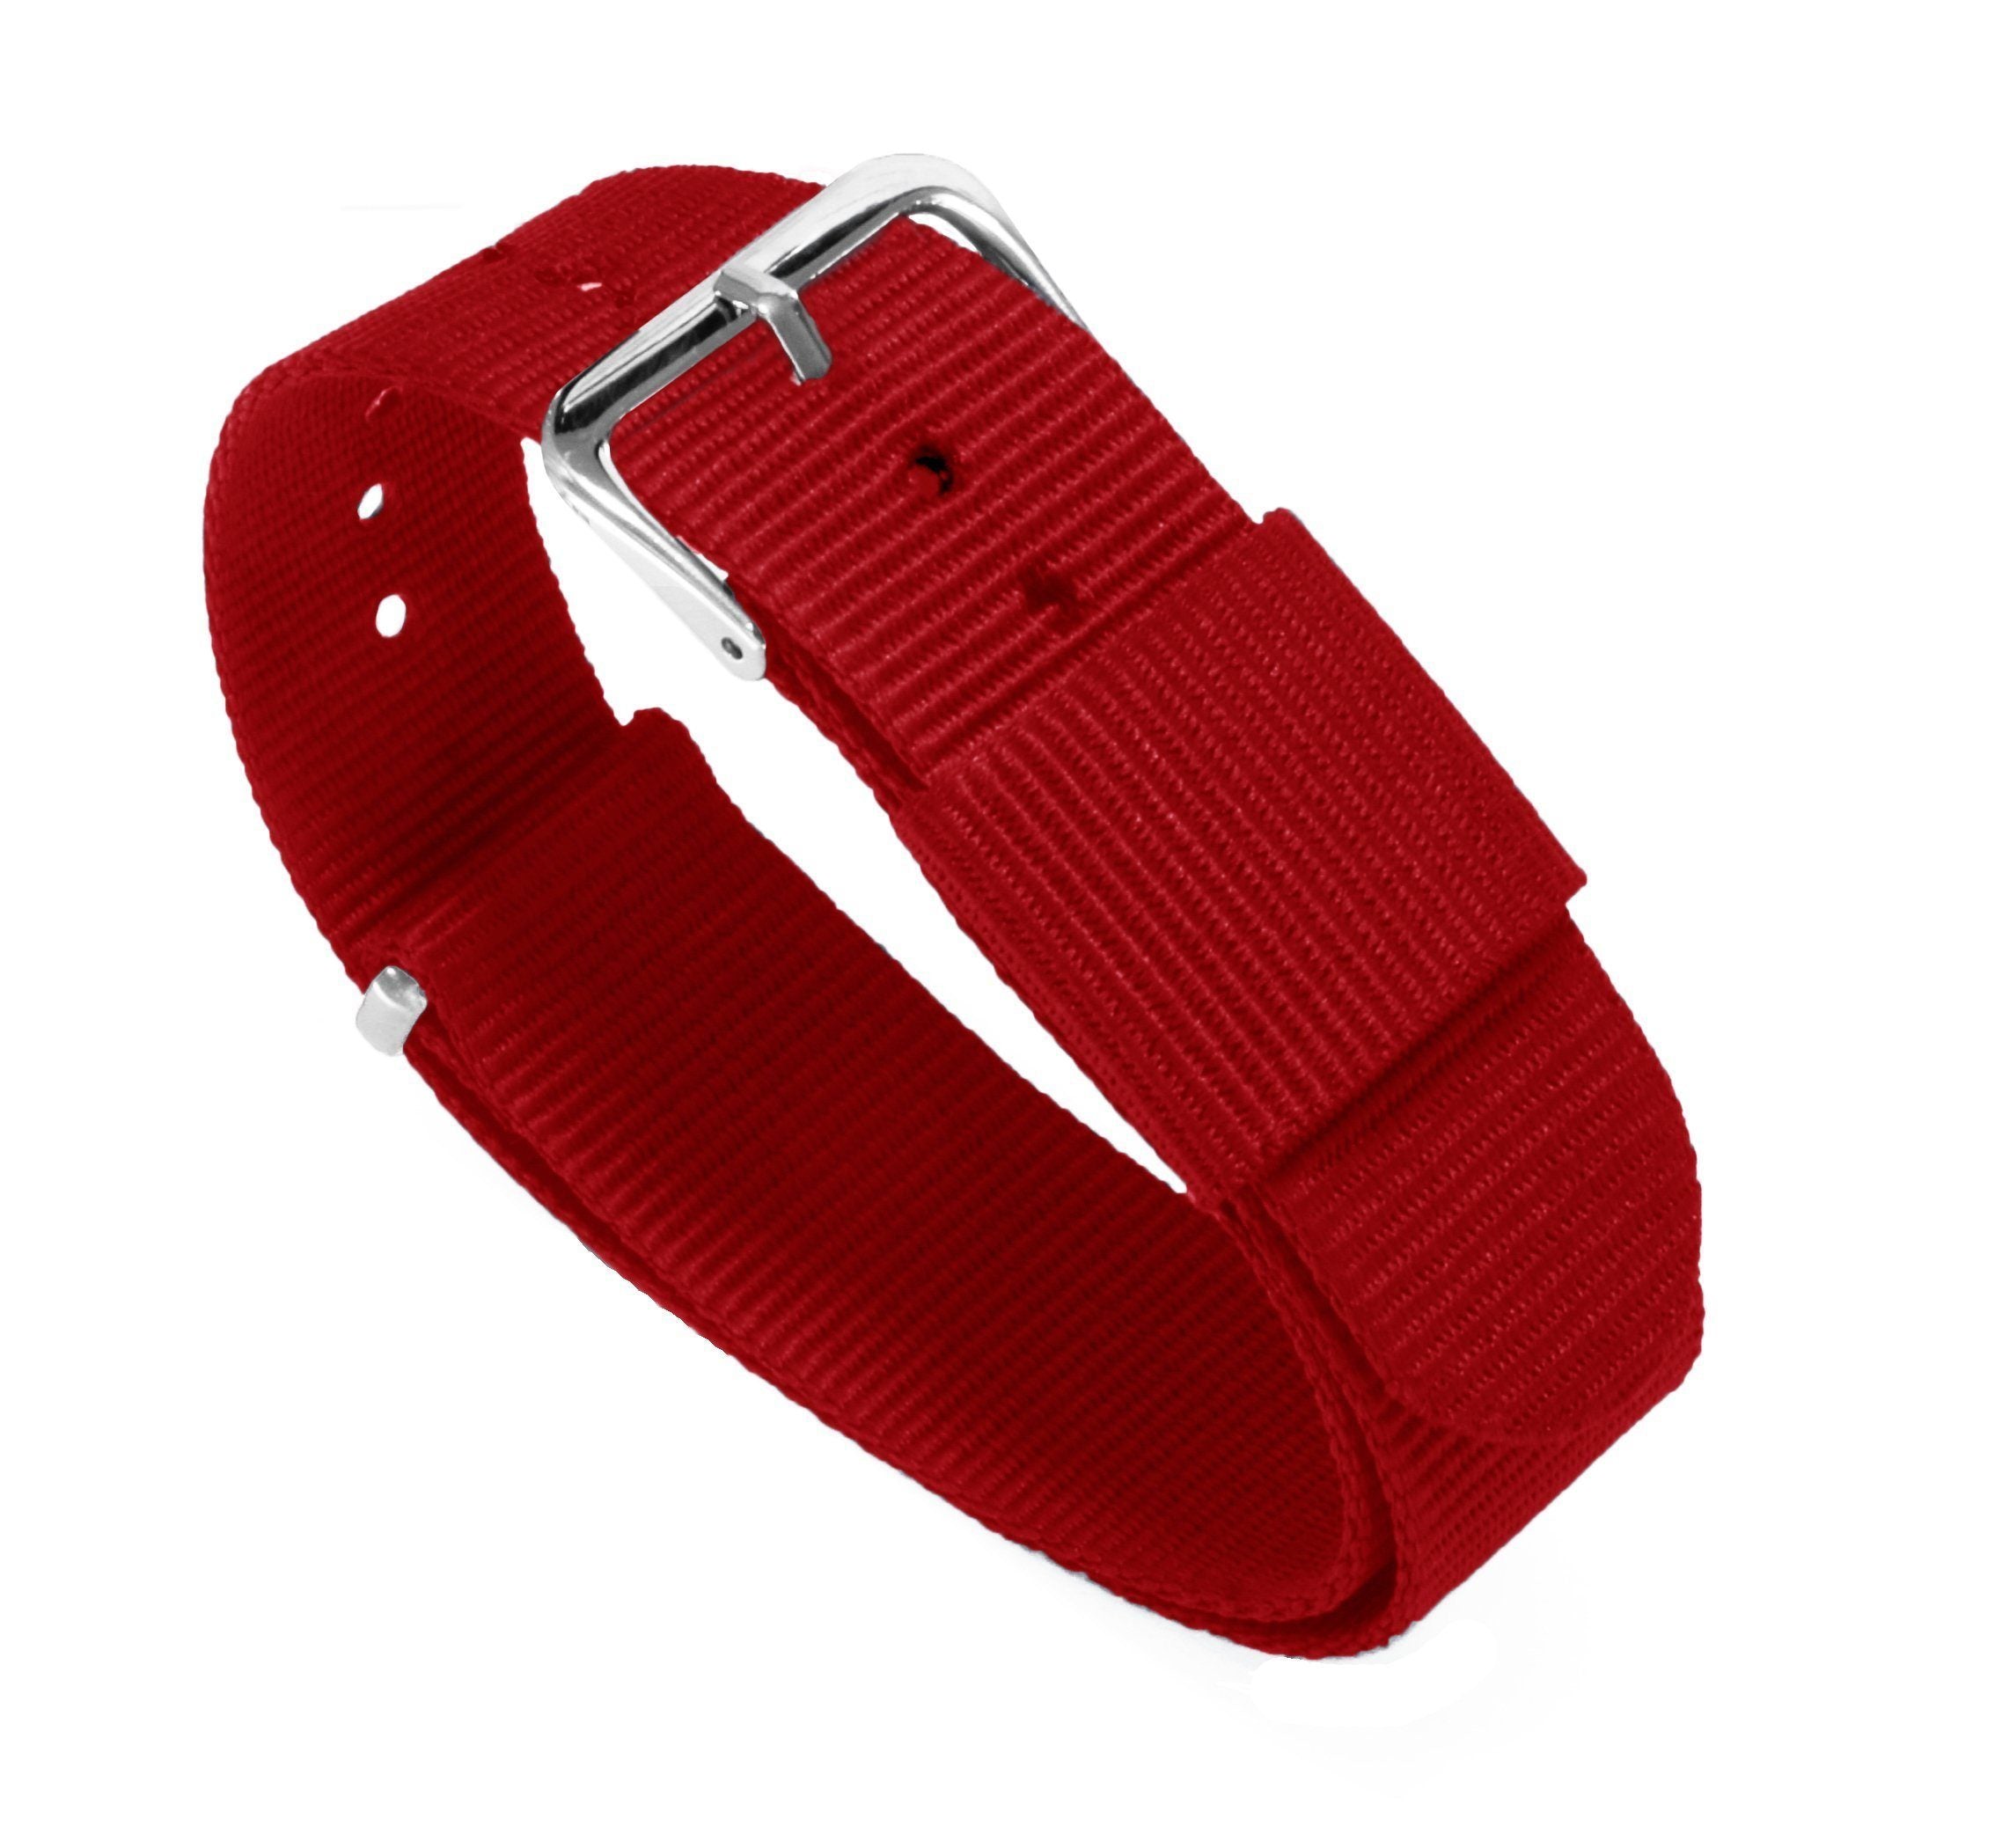 Red Monogram Luxury Watch Band